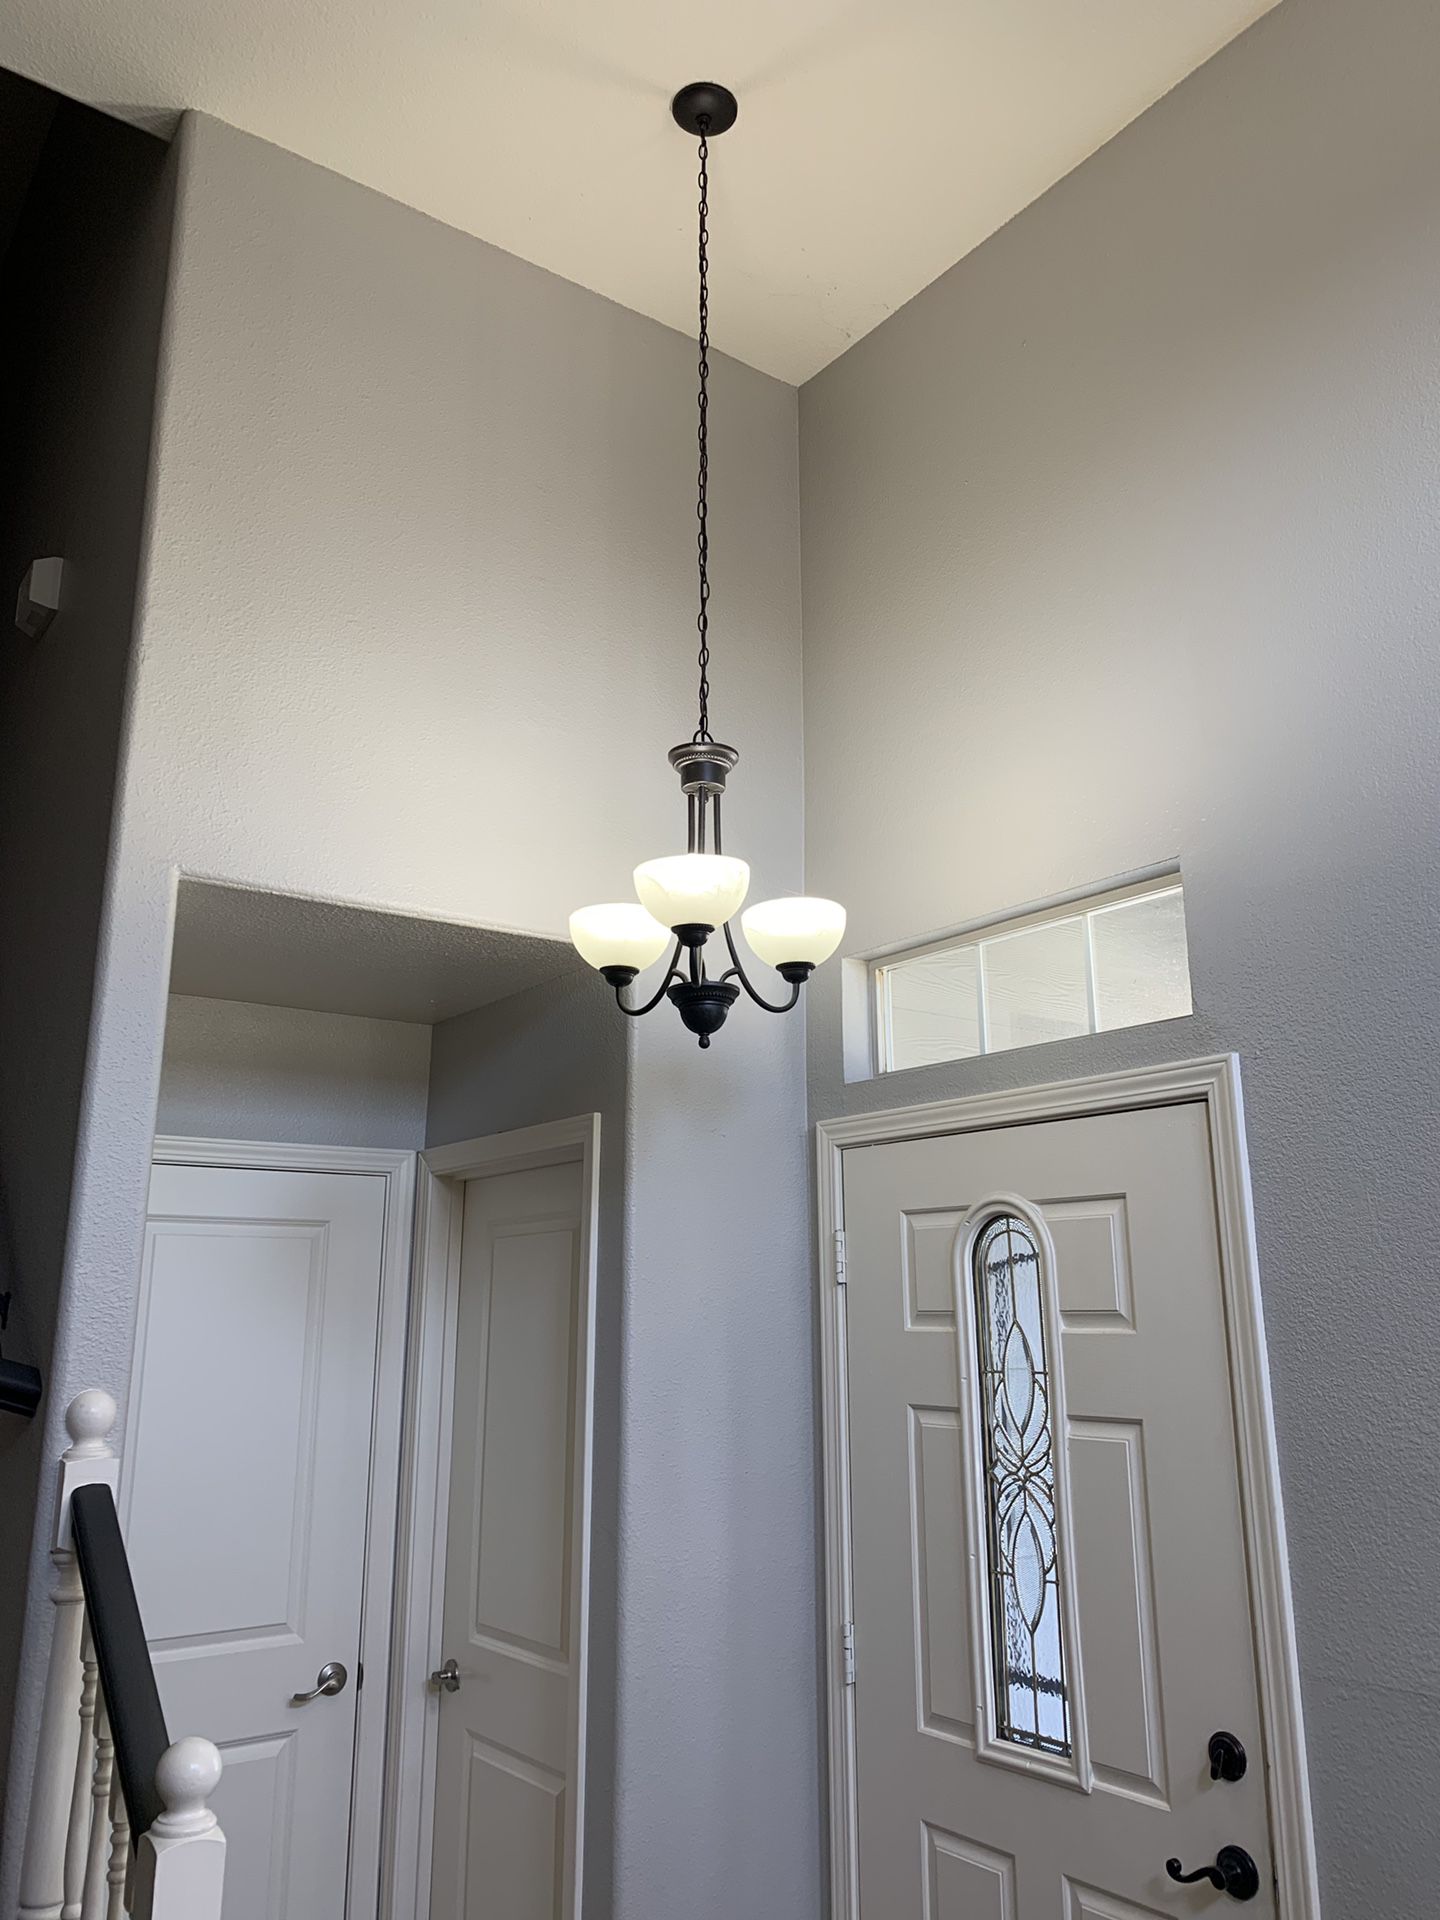 Three light chandelier